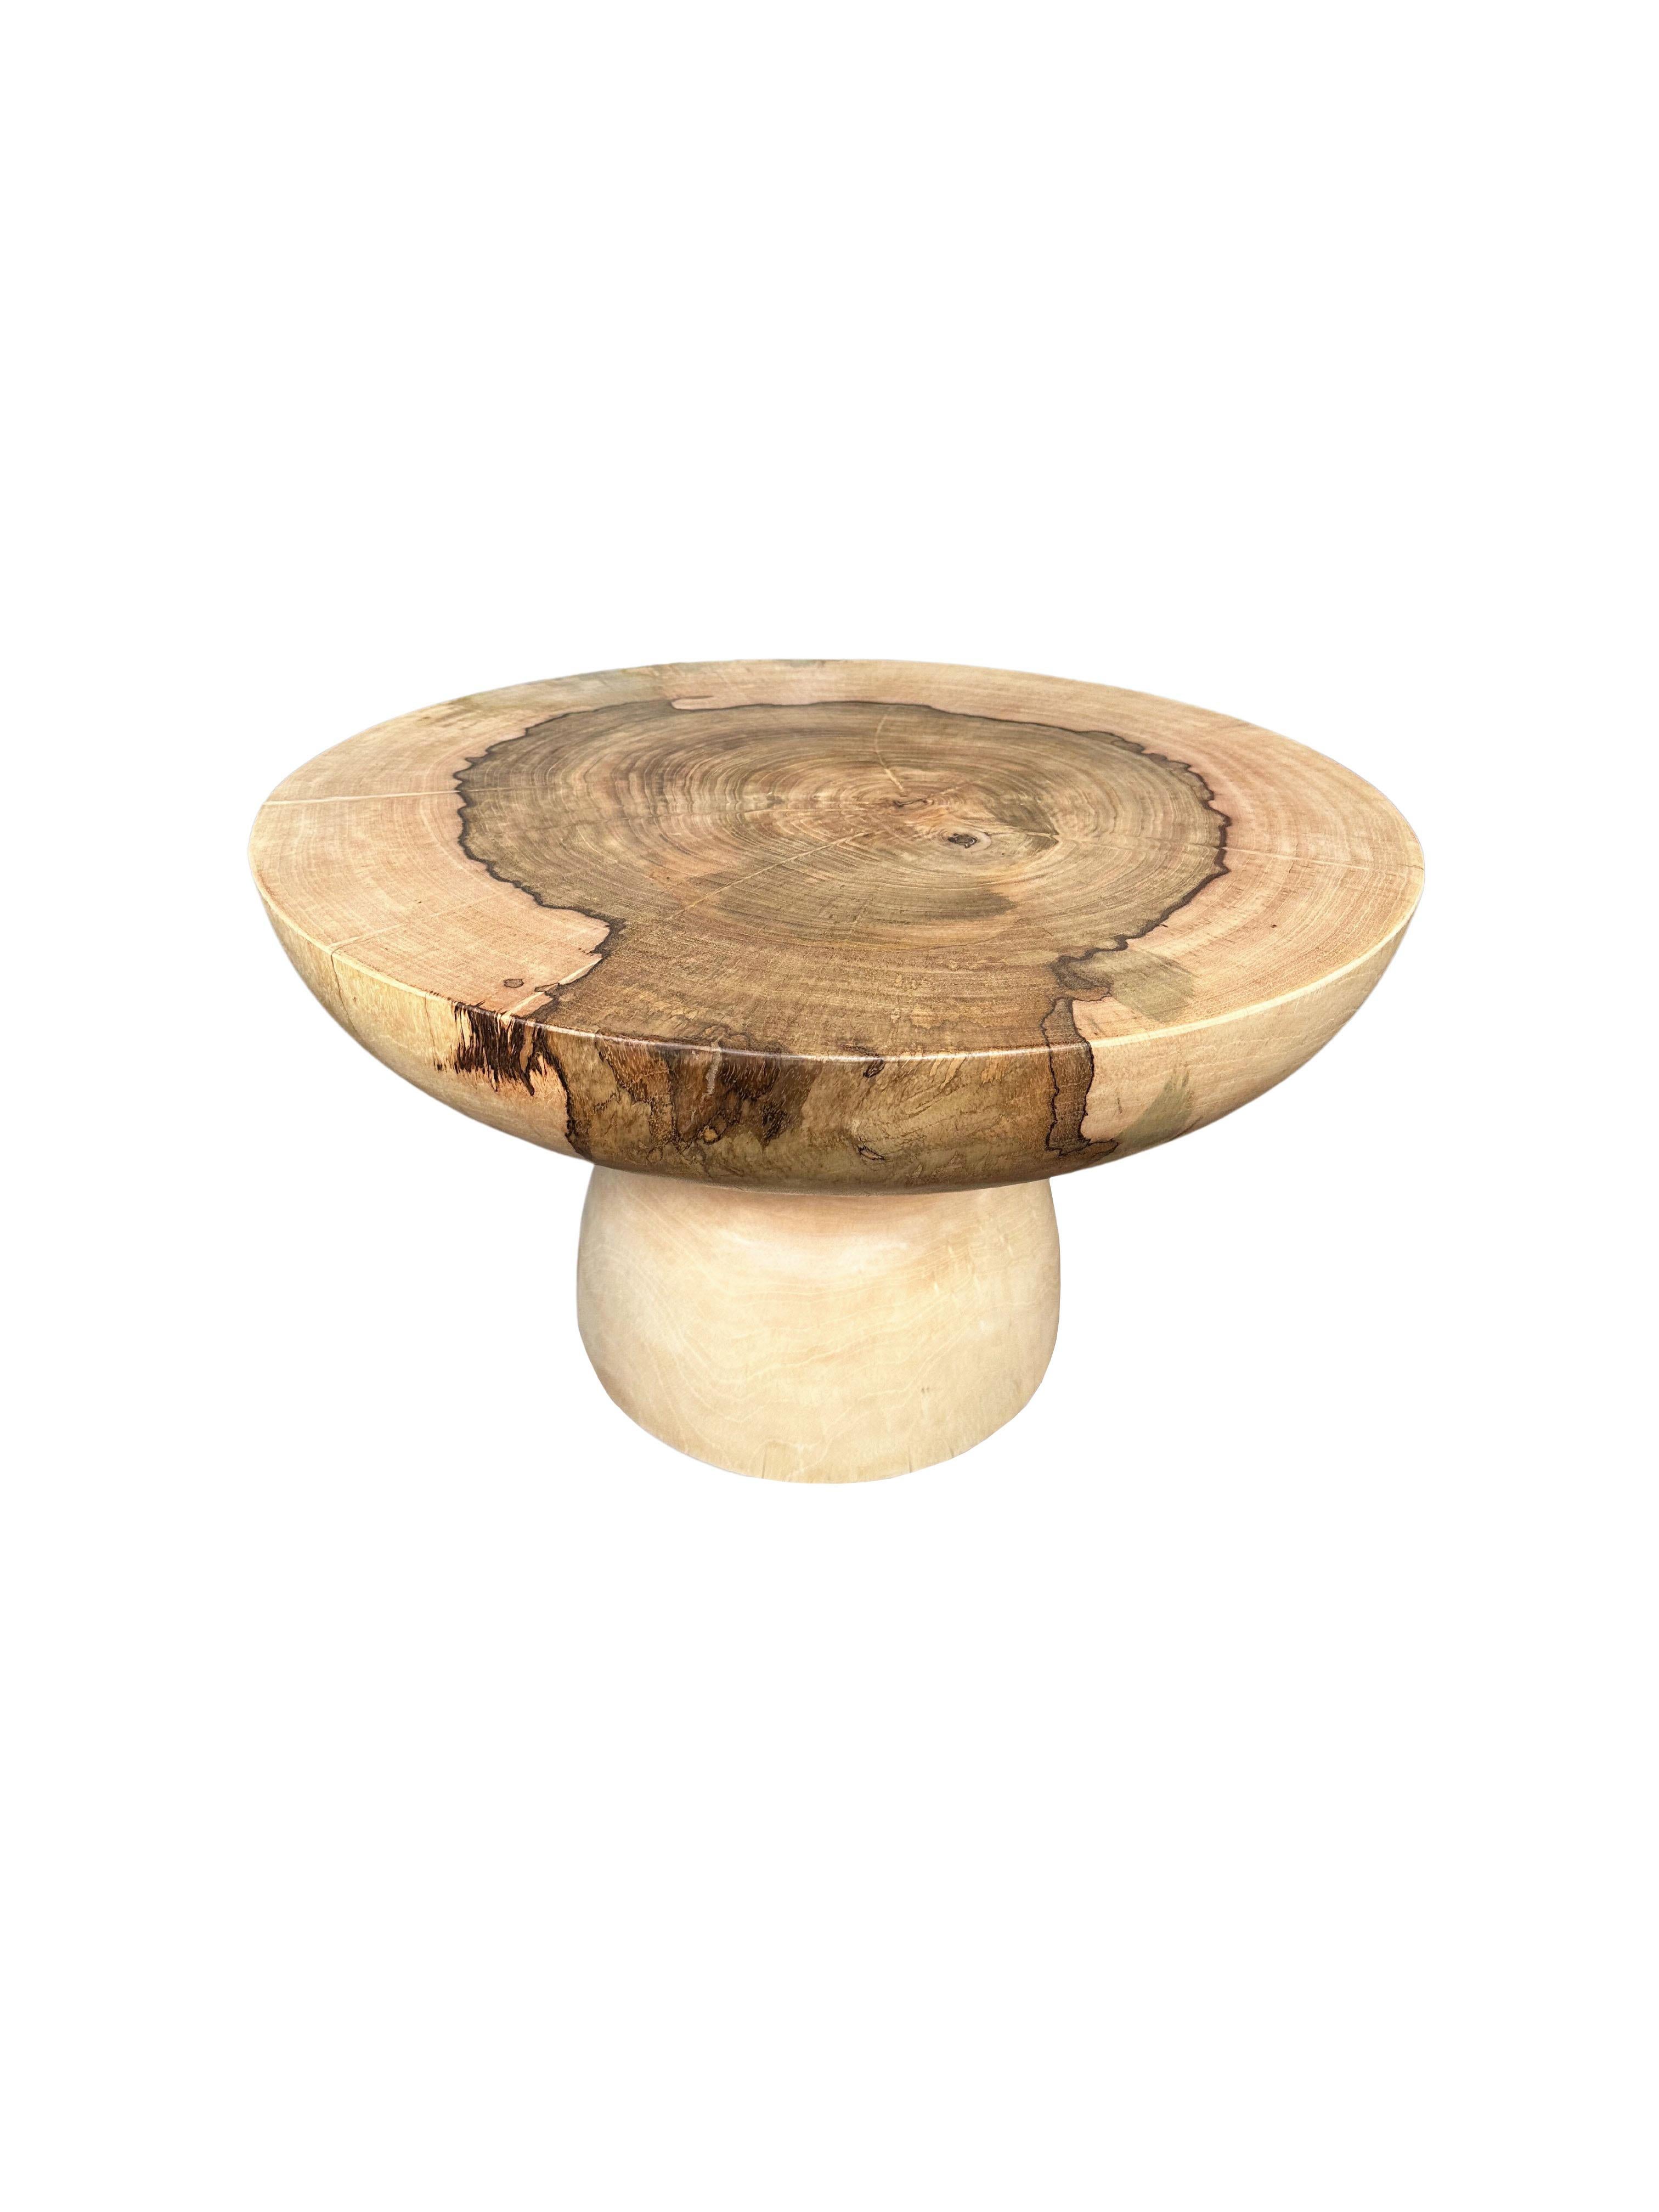 Organic Modern Sculptural Round Table Mango Wood, Natural Finish, Modern Organic For Sale